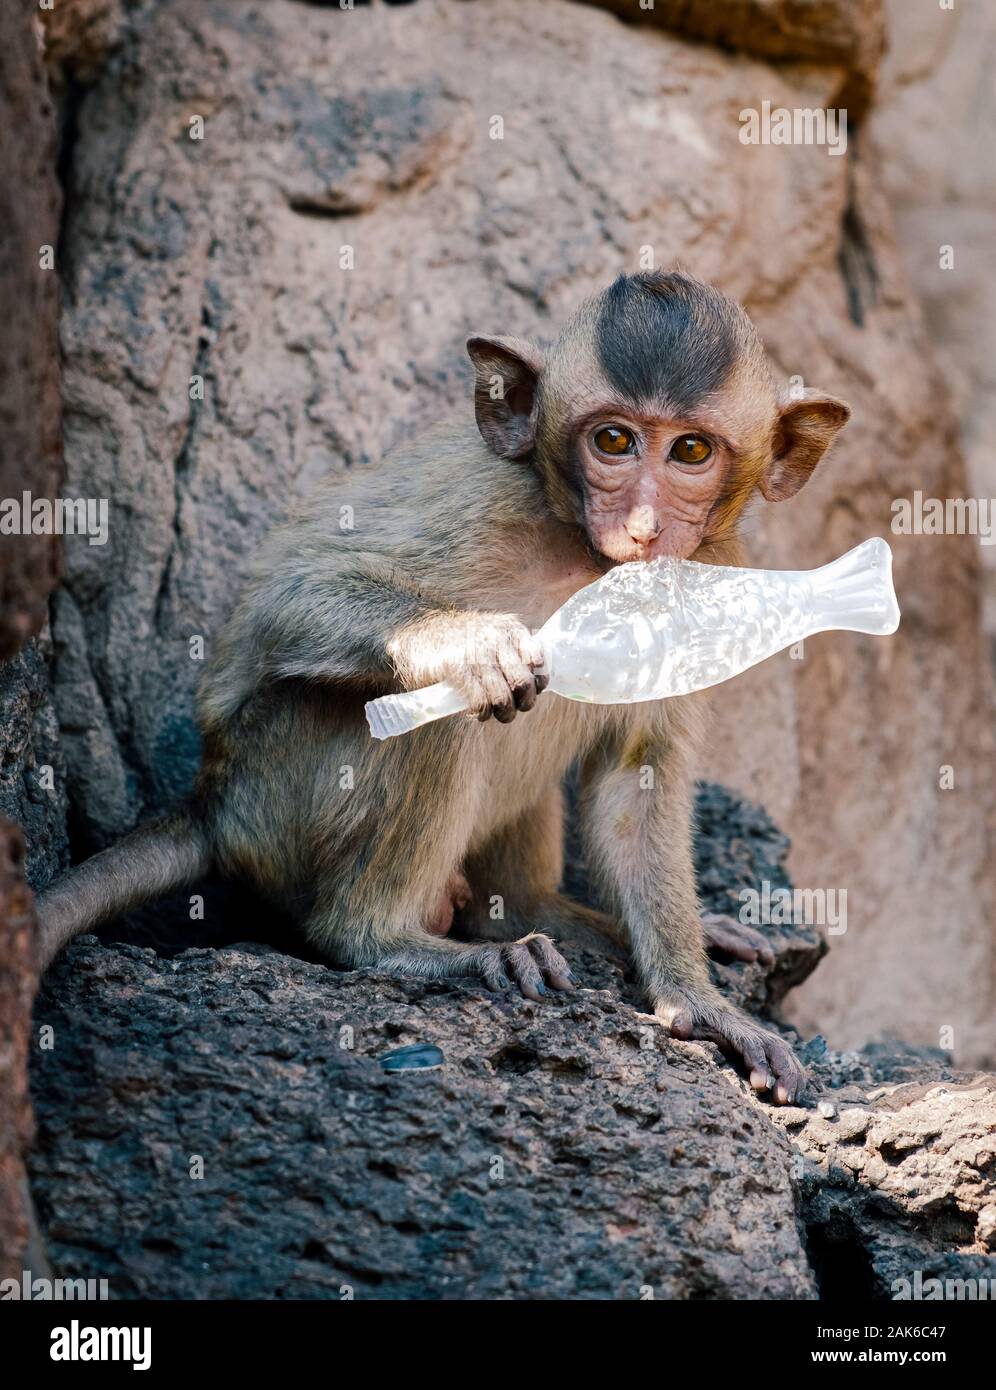 Young monkey on temple bitting plastic portrait Stock Photo